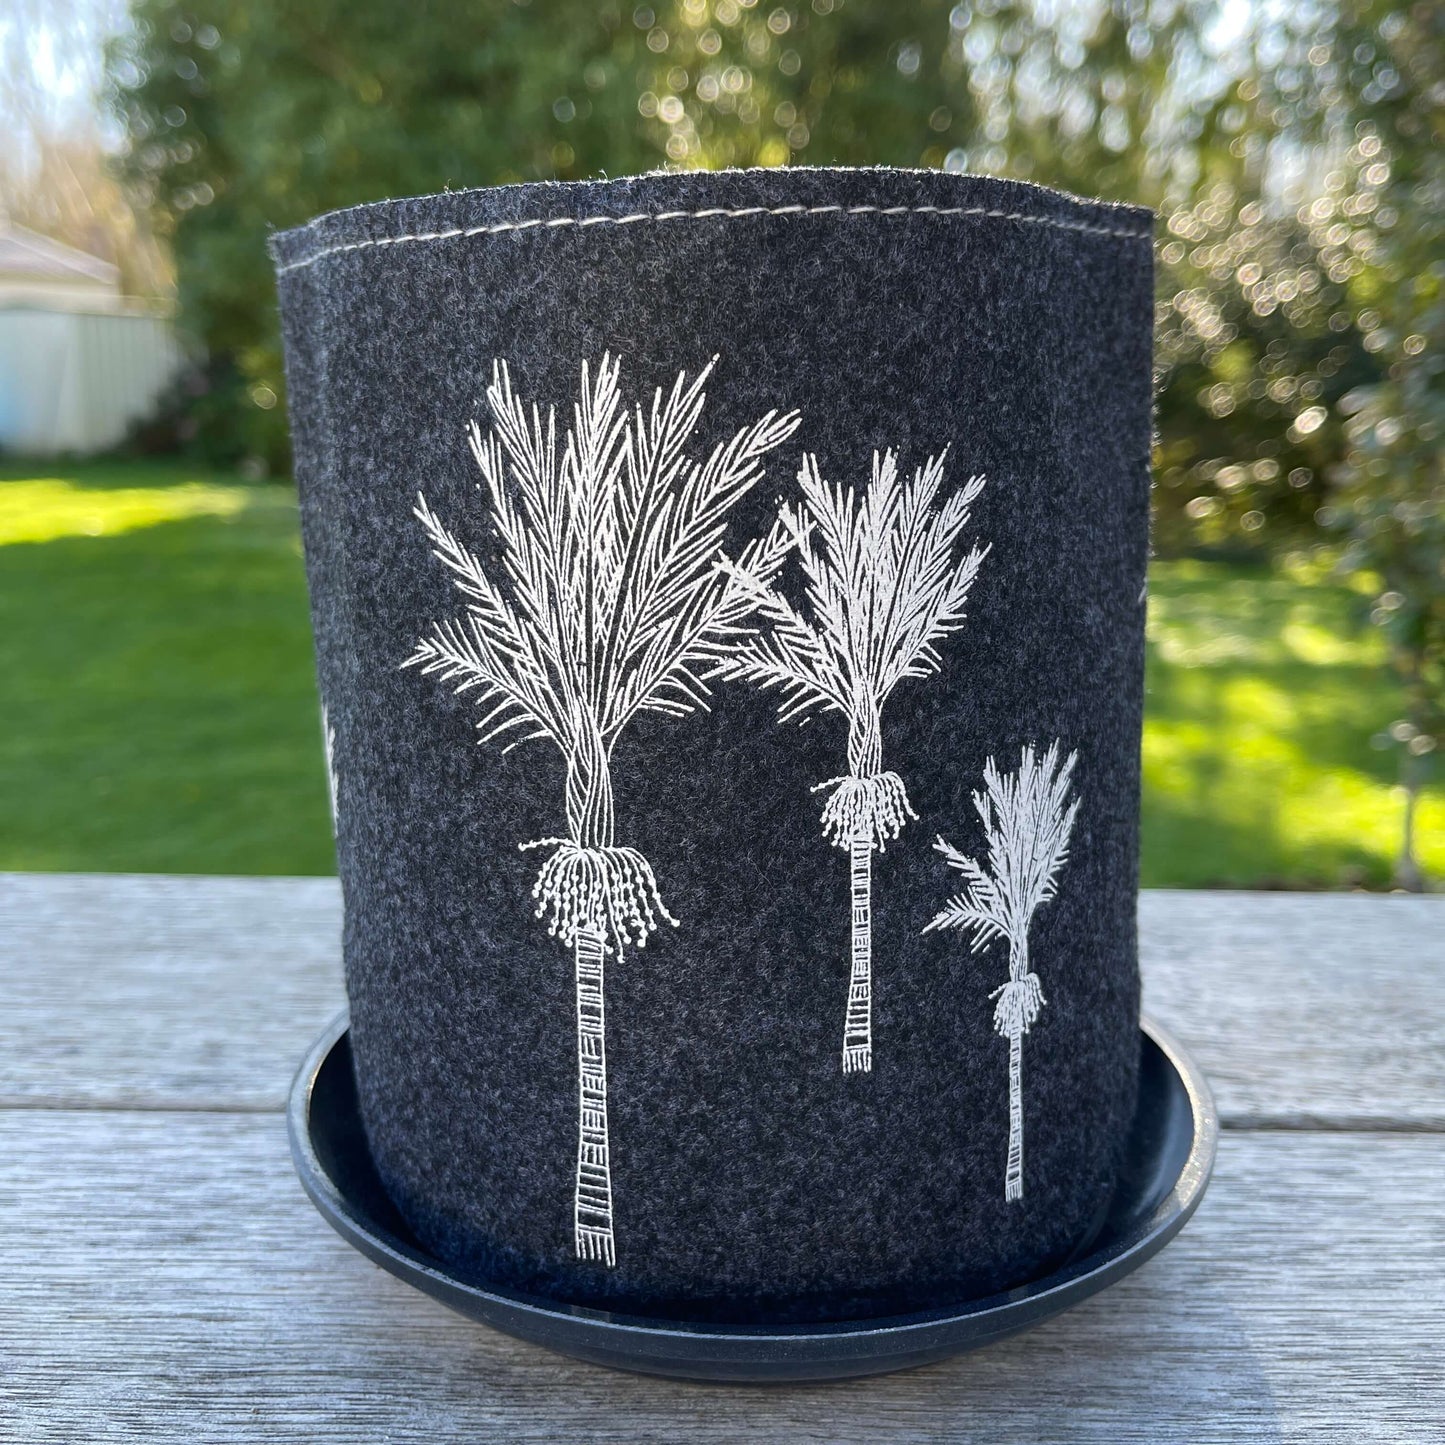 Dark grey felt planter with white Nikau trees printed on it sitting in a grey dish.